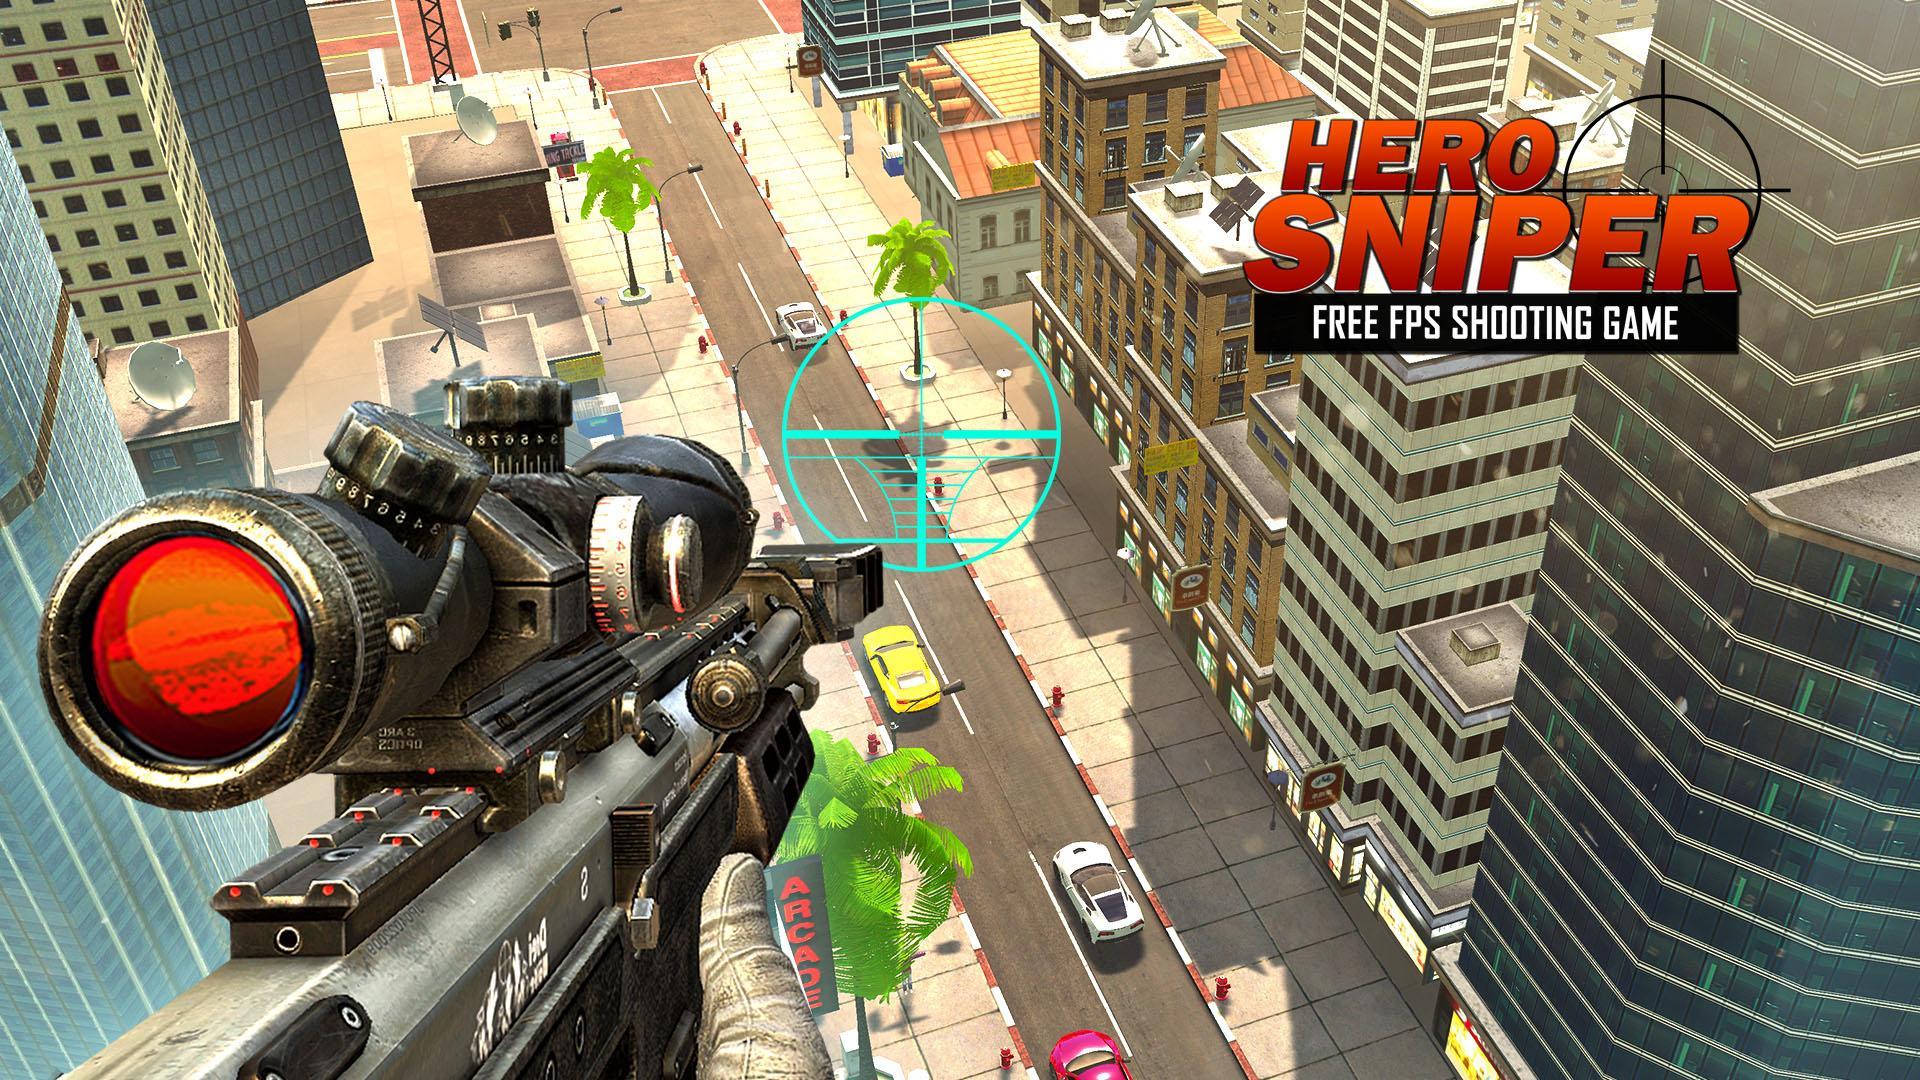 Hero Sniper Fps Free Gun Shooting Games 2020 For Android Apk Download - gun games on roblox